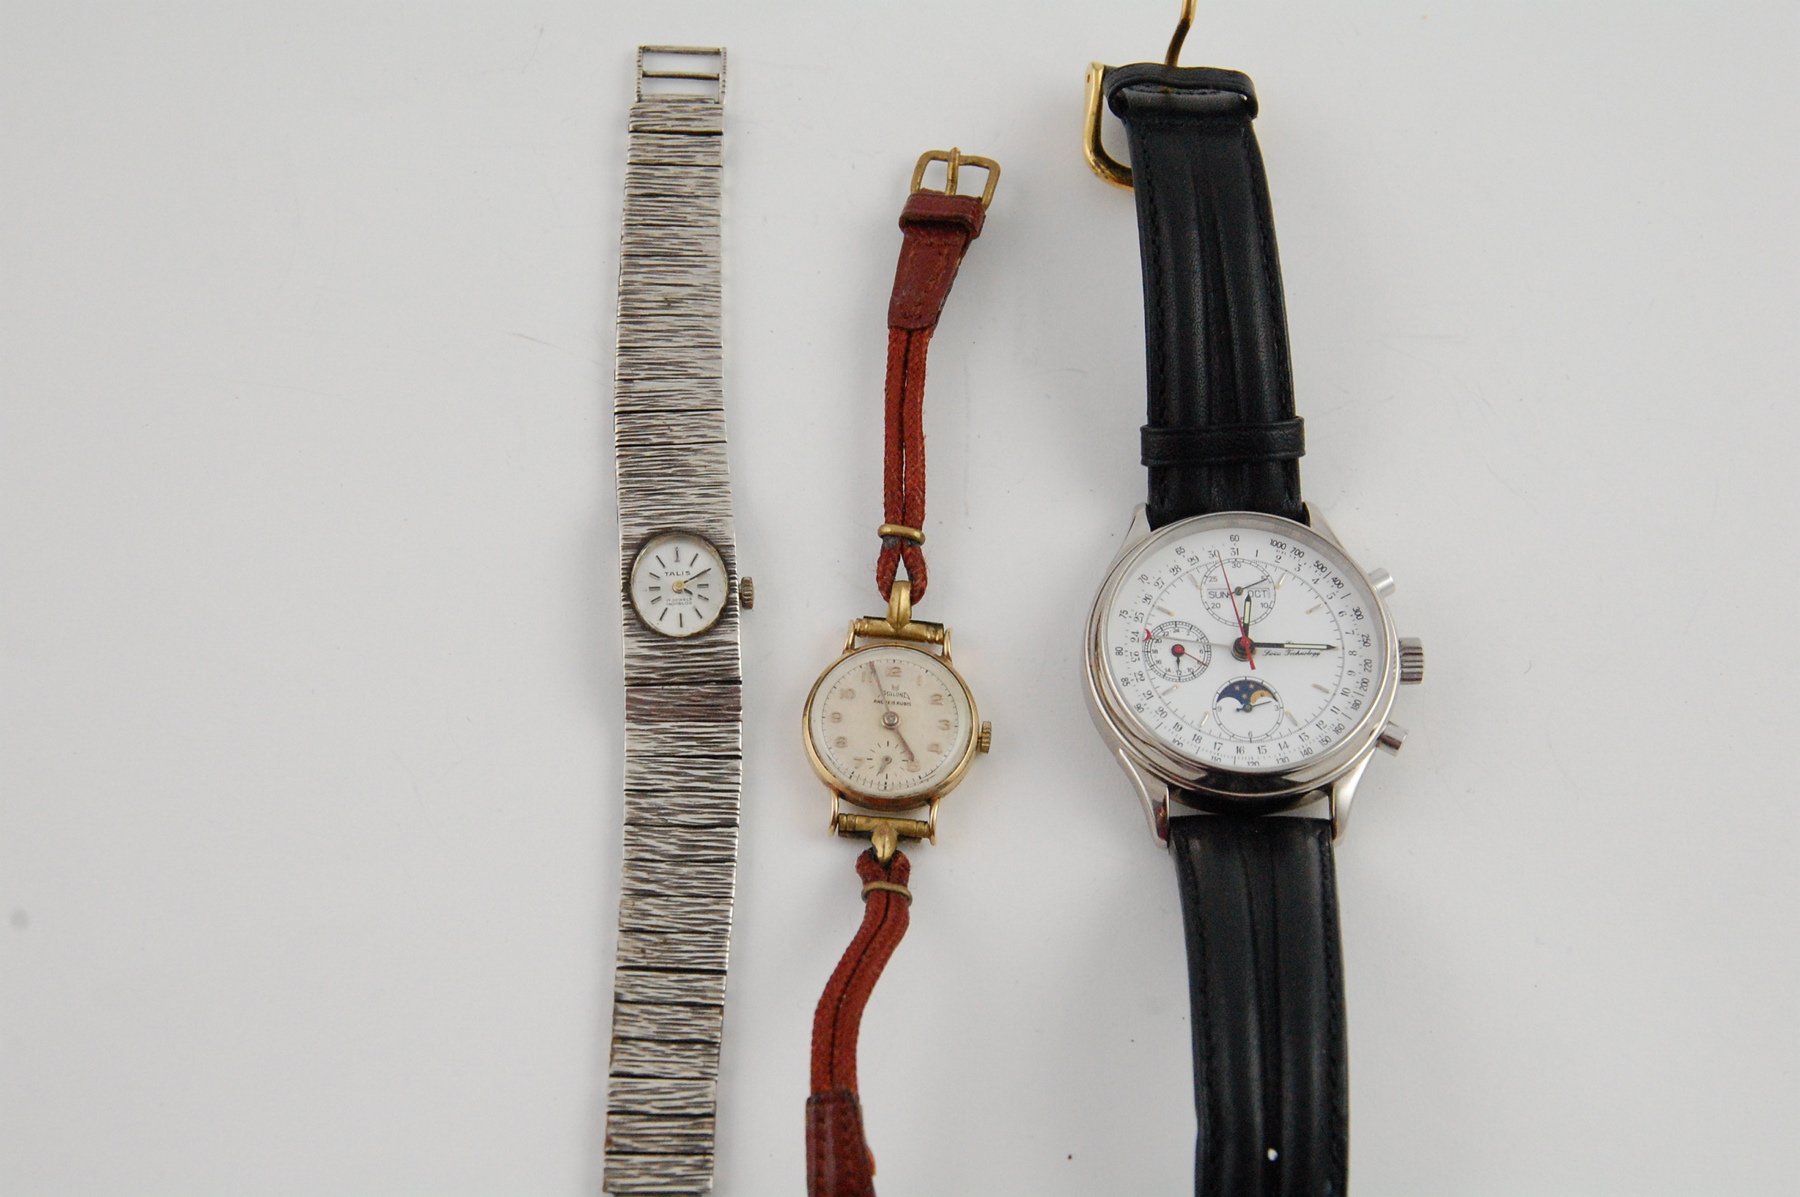 Lady's 9ct gold wrist watch, 1950; a silver bracelet watch & a gent's ETA automatic wrist